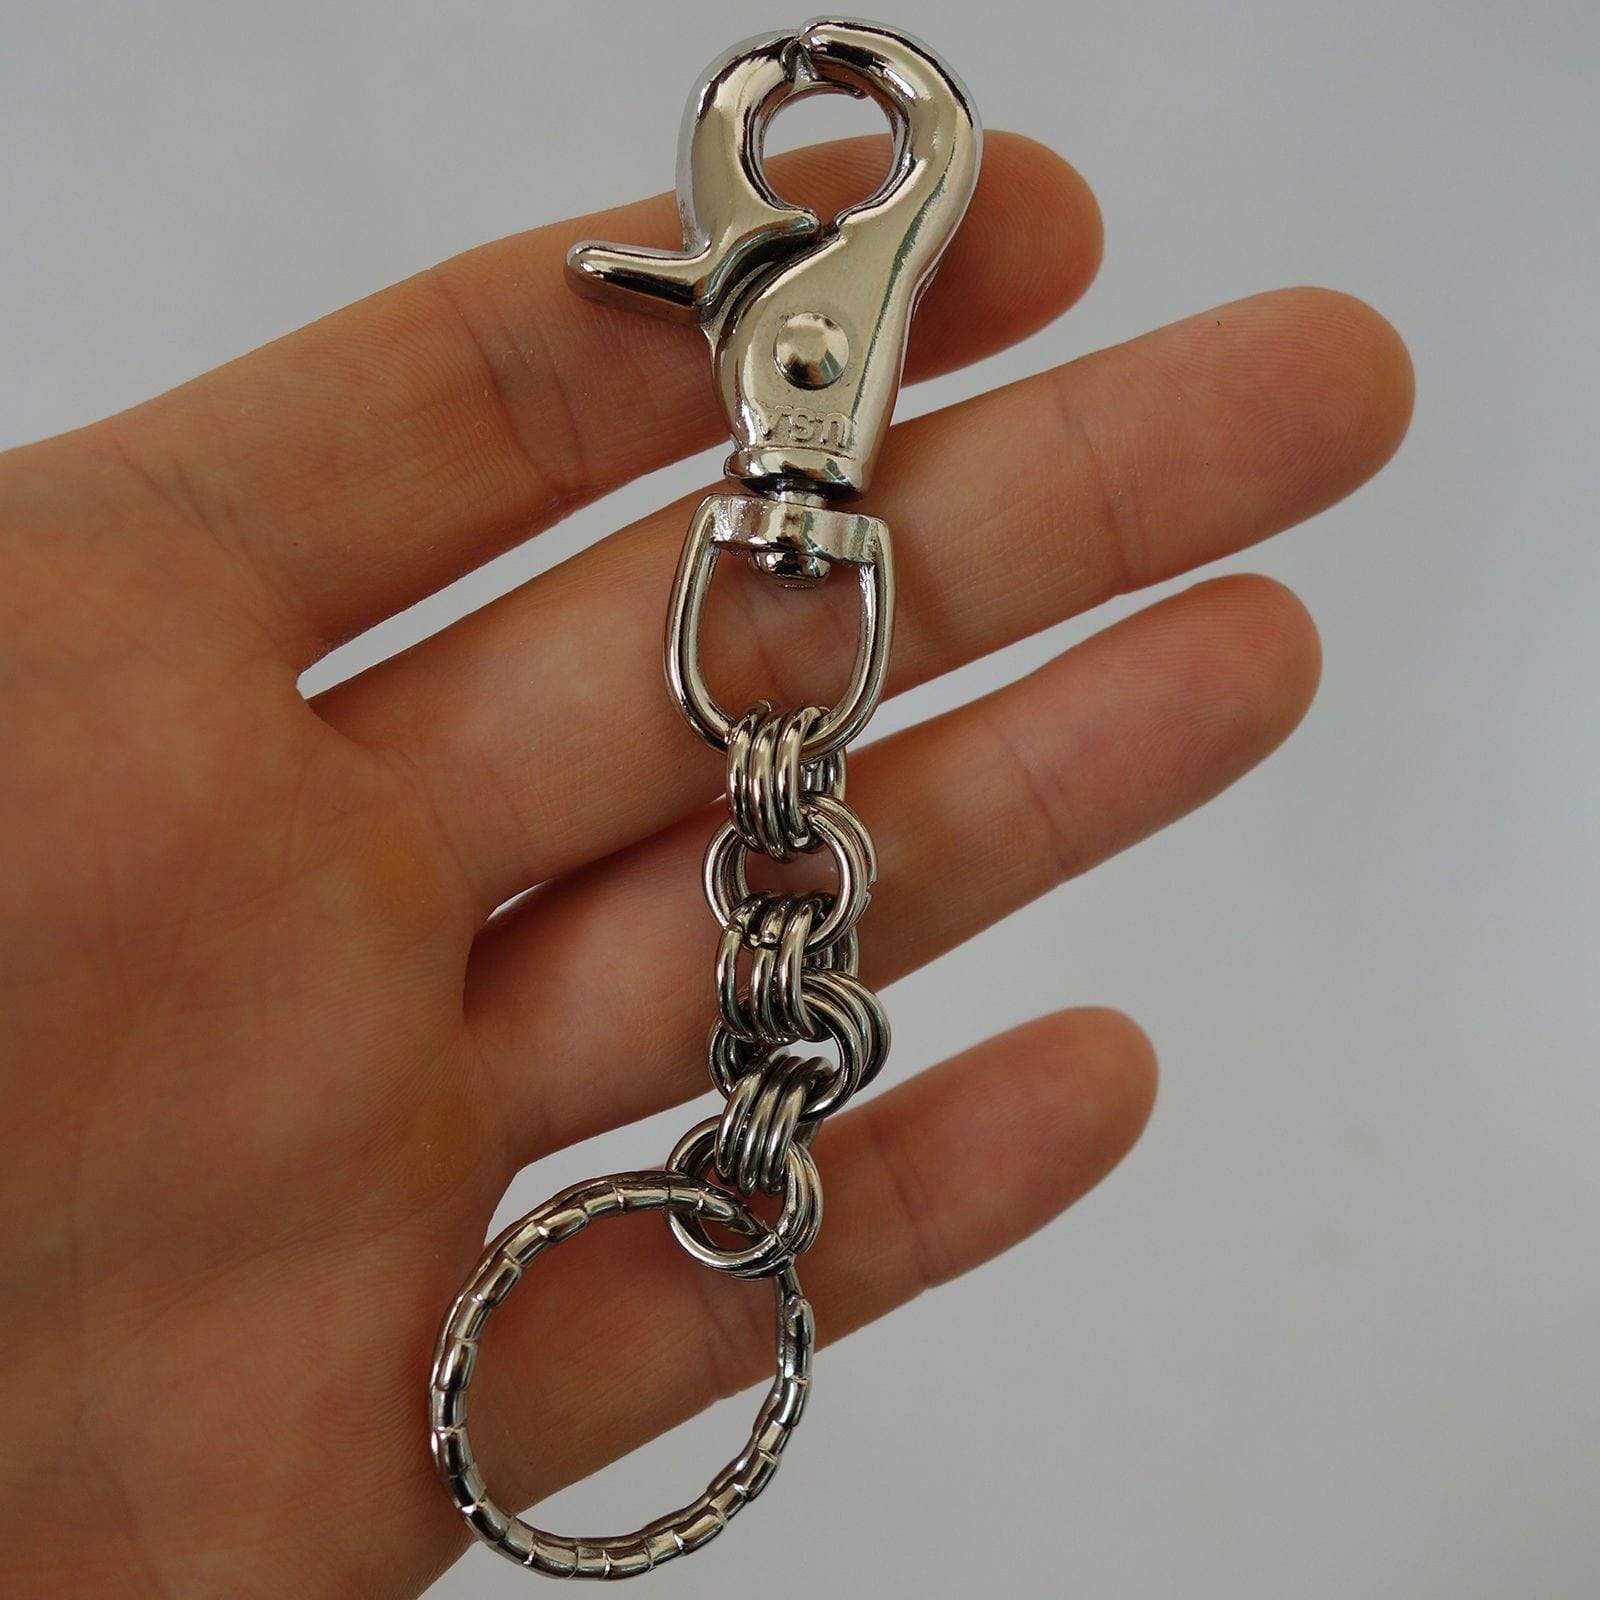 Strong Metal Keyring Keychain Key Holder Ring Chain Car Keys Fob Belt Loop Clip Strong Metal Keyring Keychain Key Holder Ring Chain Car Keys Fob Belt Loop Clip